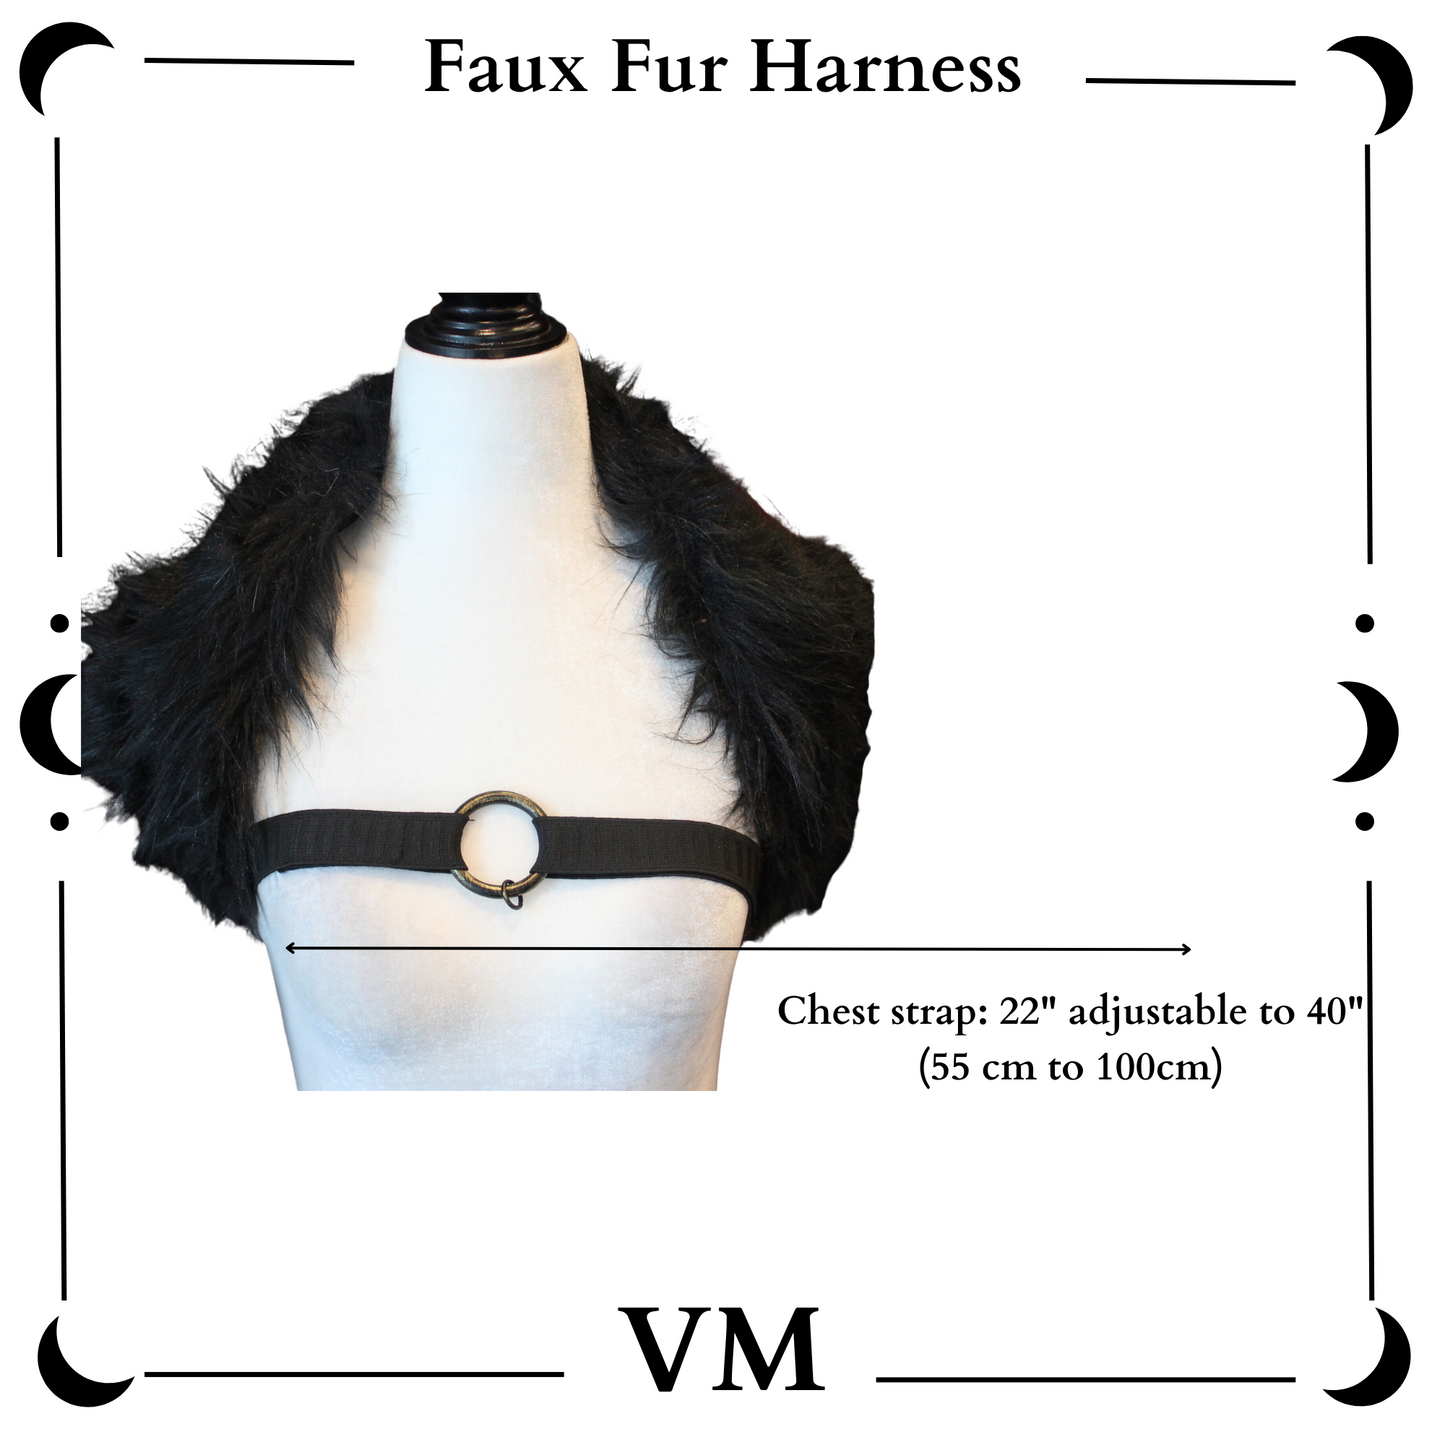 The VM Faux Fur Harness